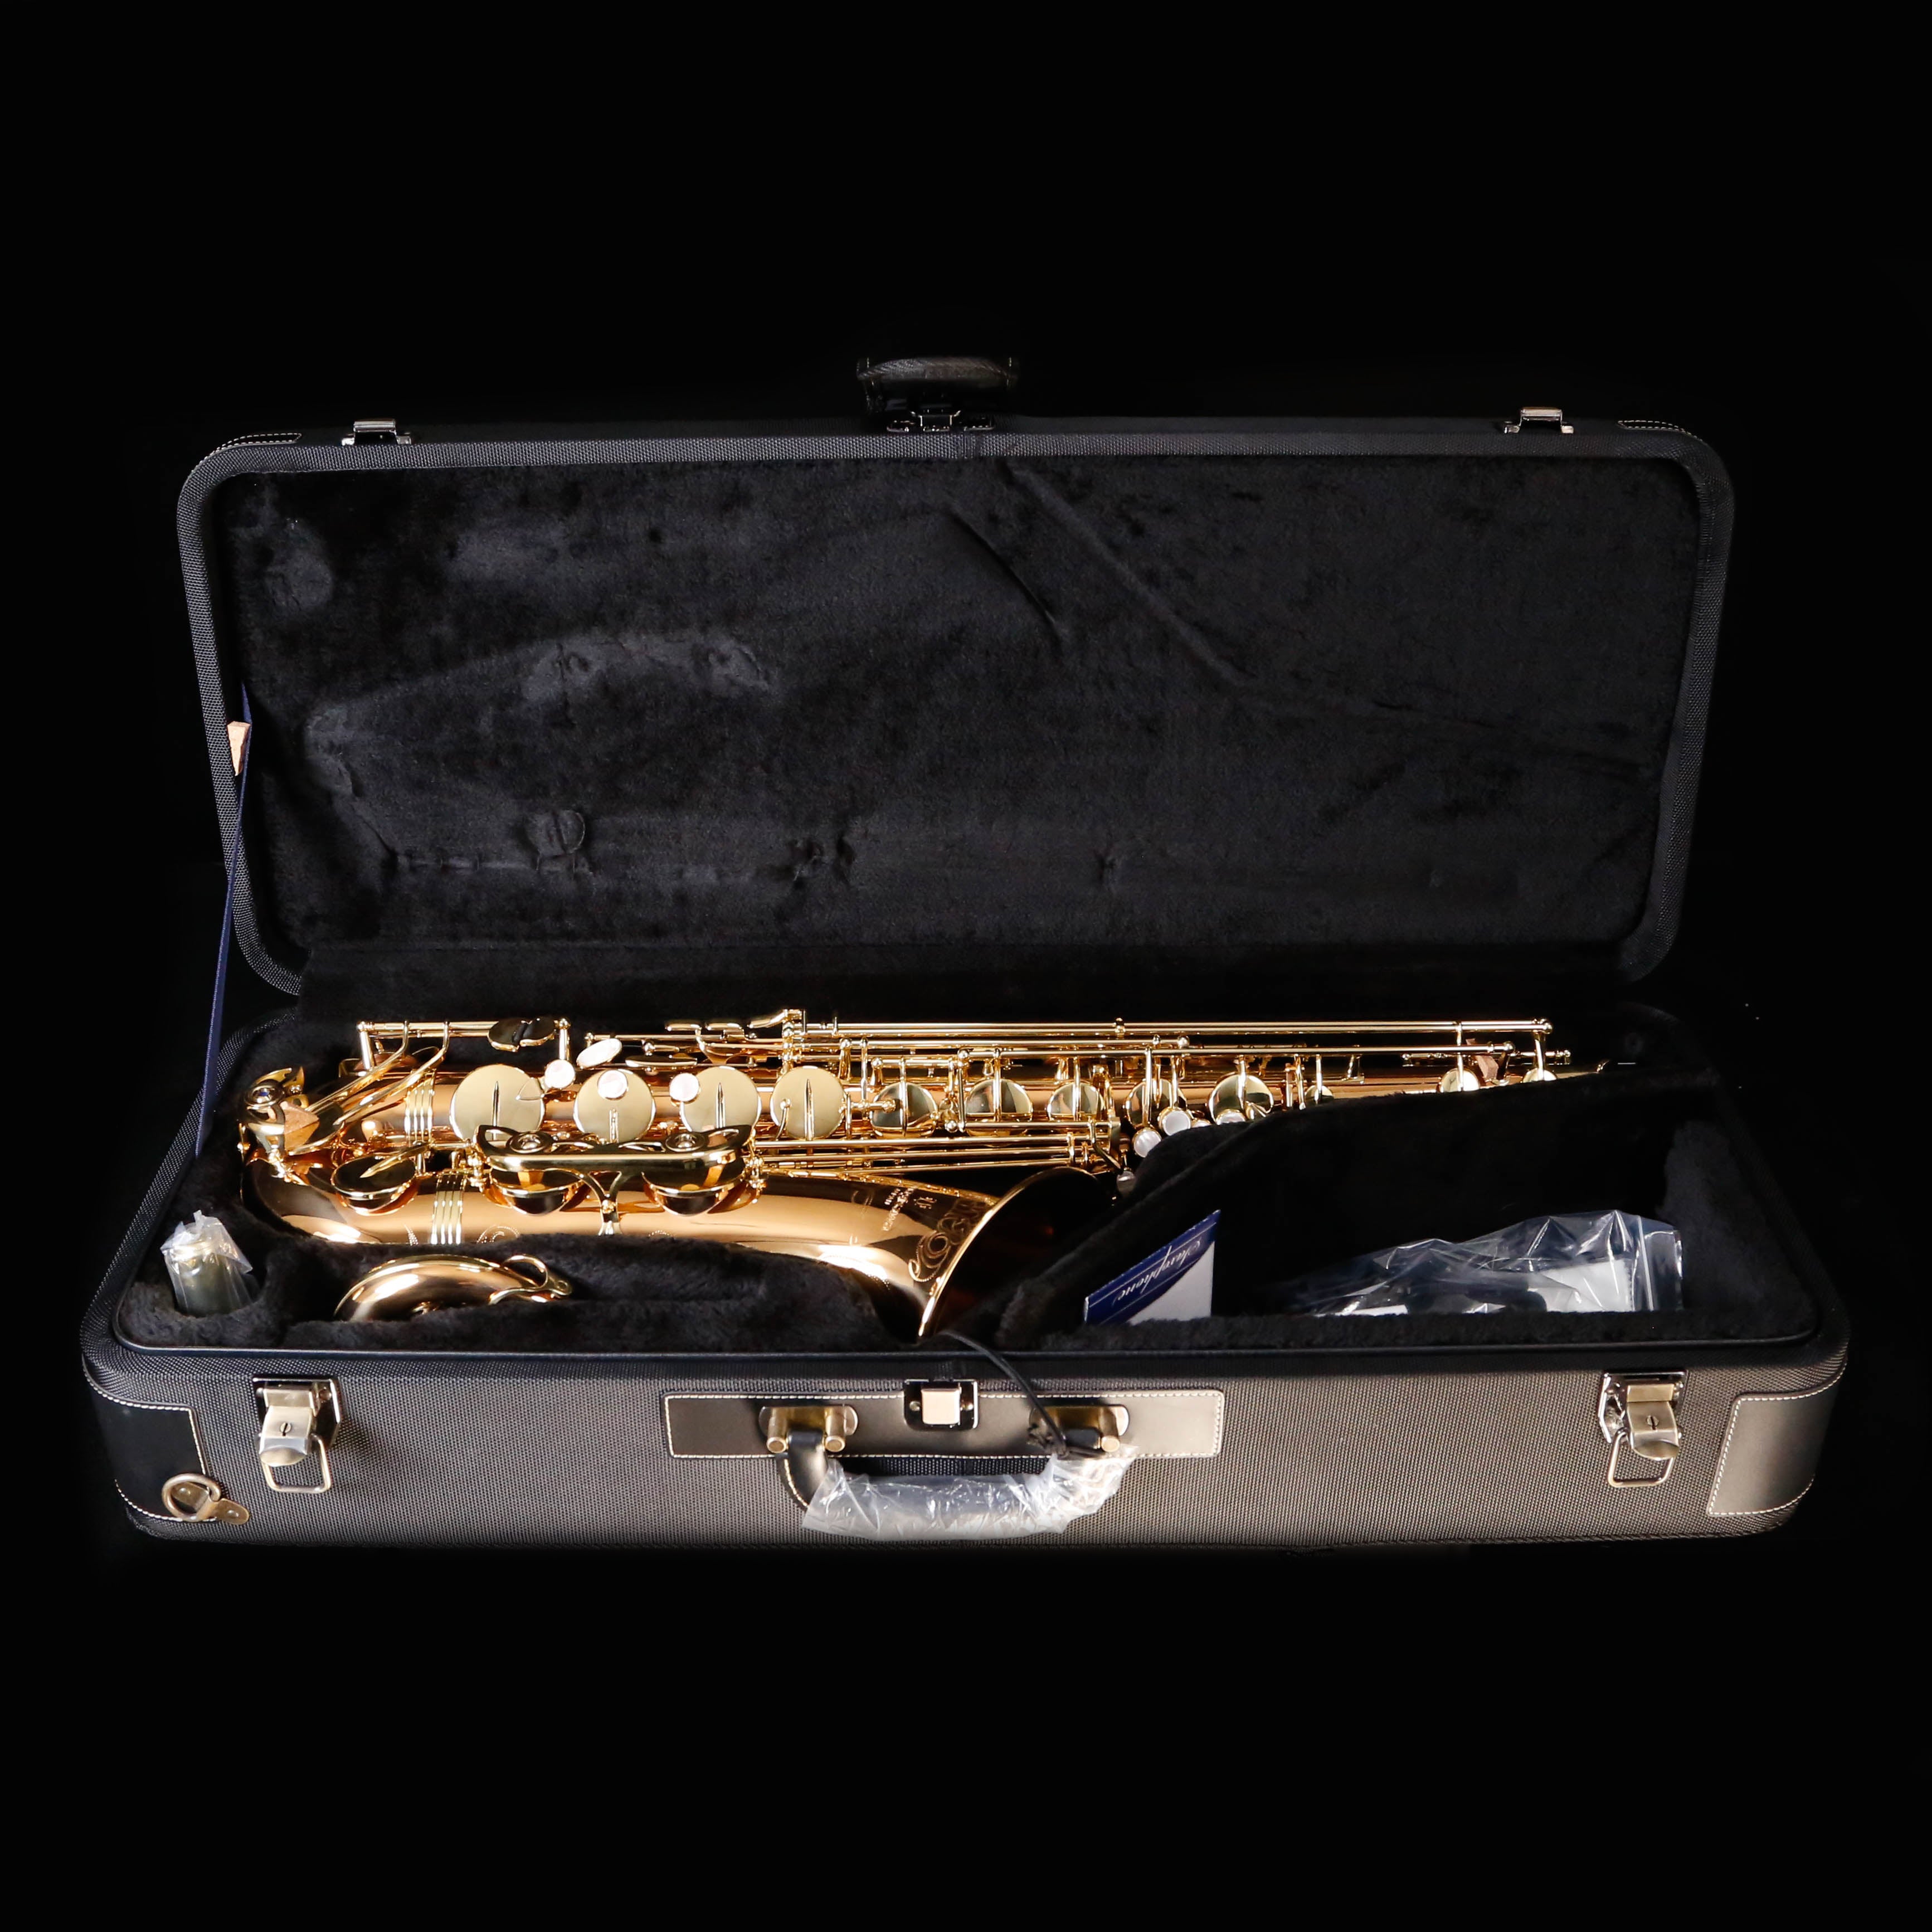 Yanagisawa TWO20 Elite Bb Tenor Saxophone, Bronze